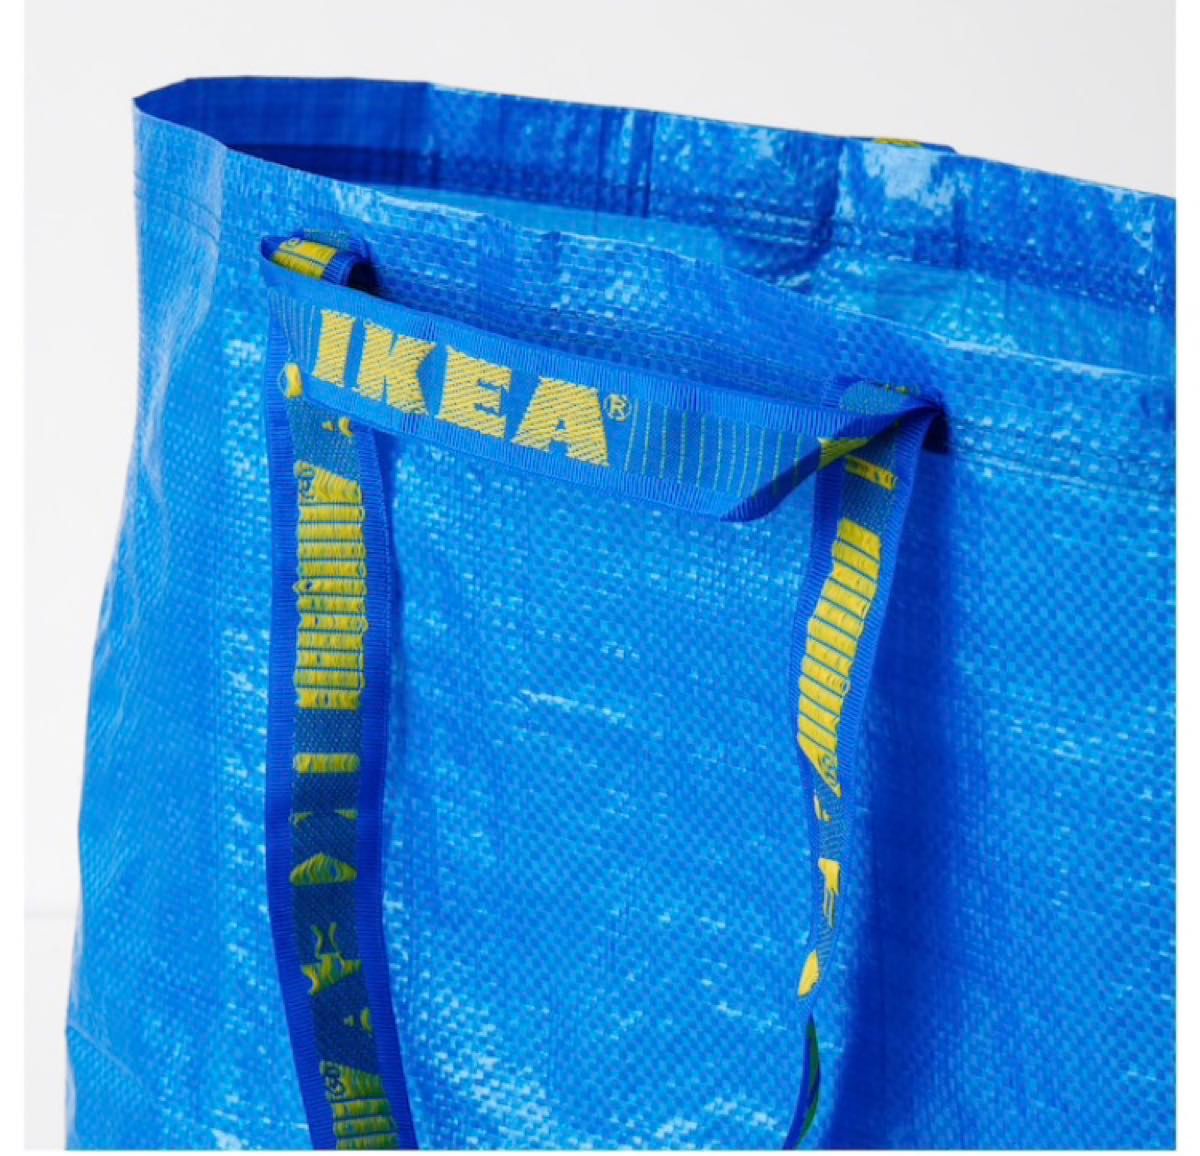 IKEA フラクタ ブルーバック FRAKTA Mサイズ 2枚  新品